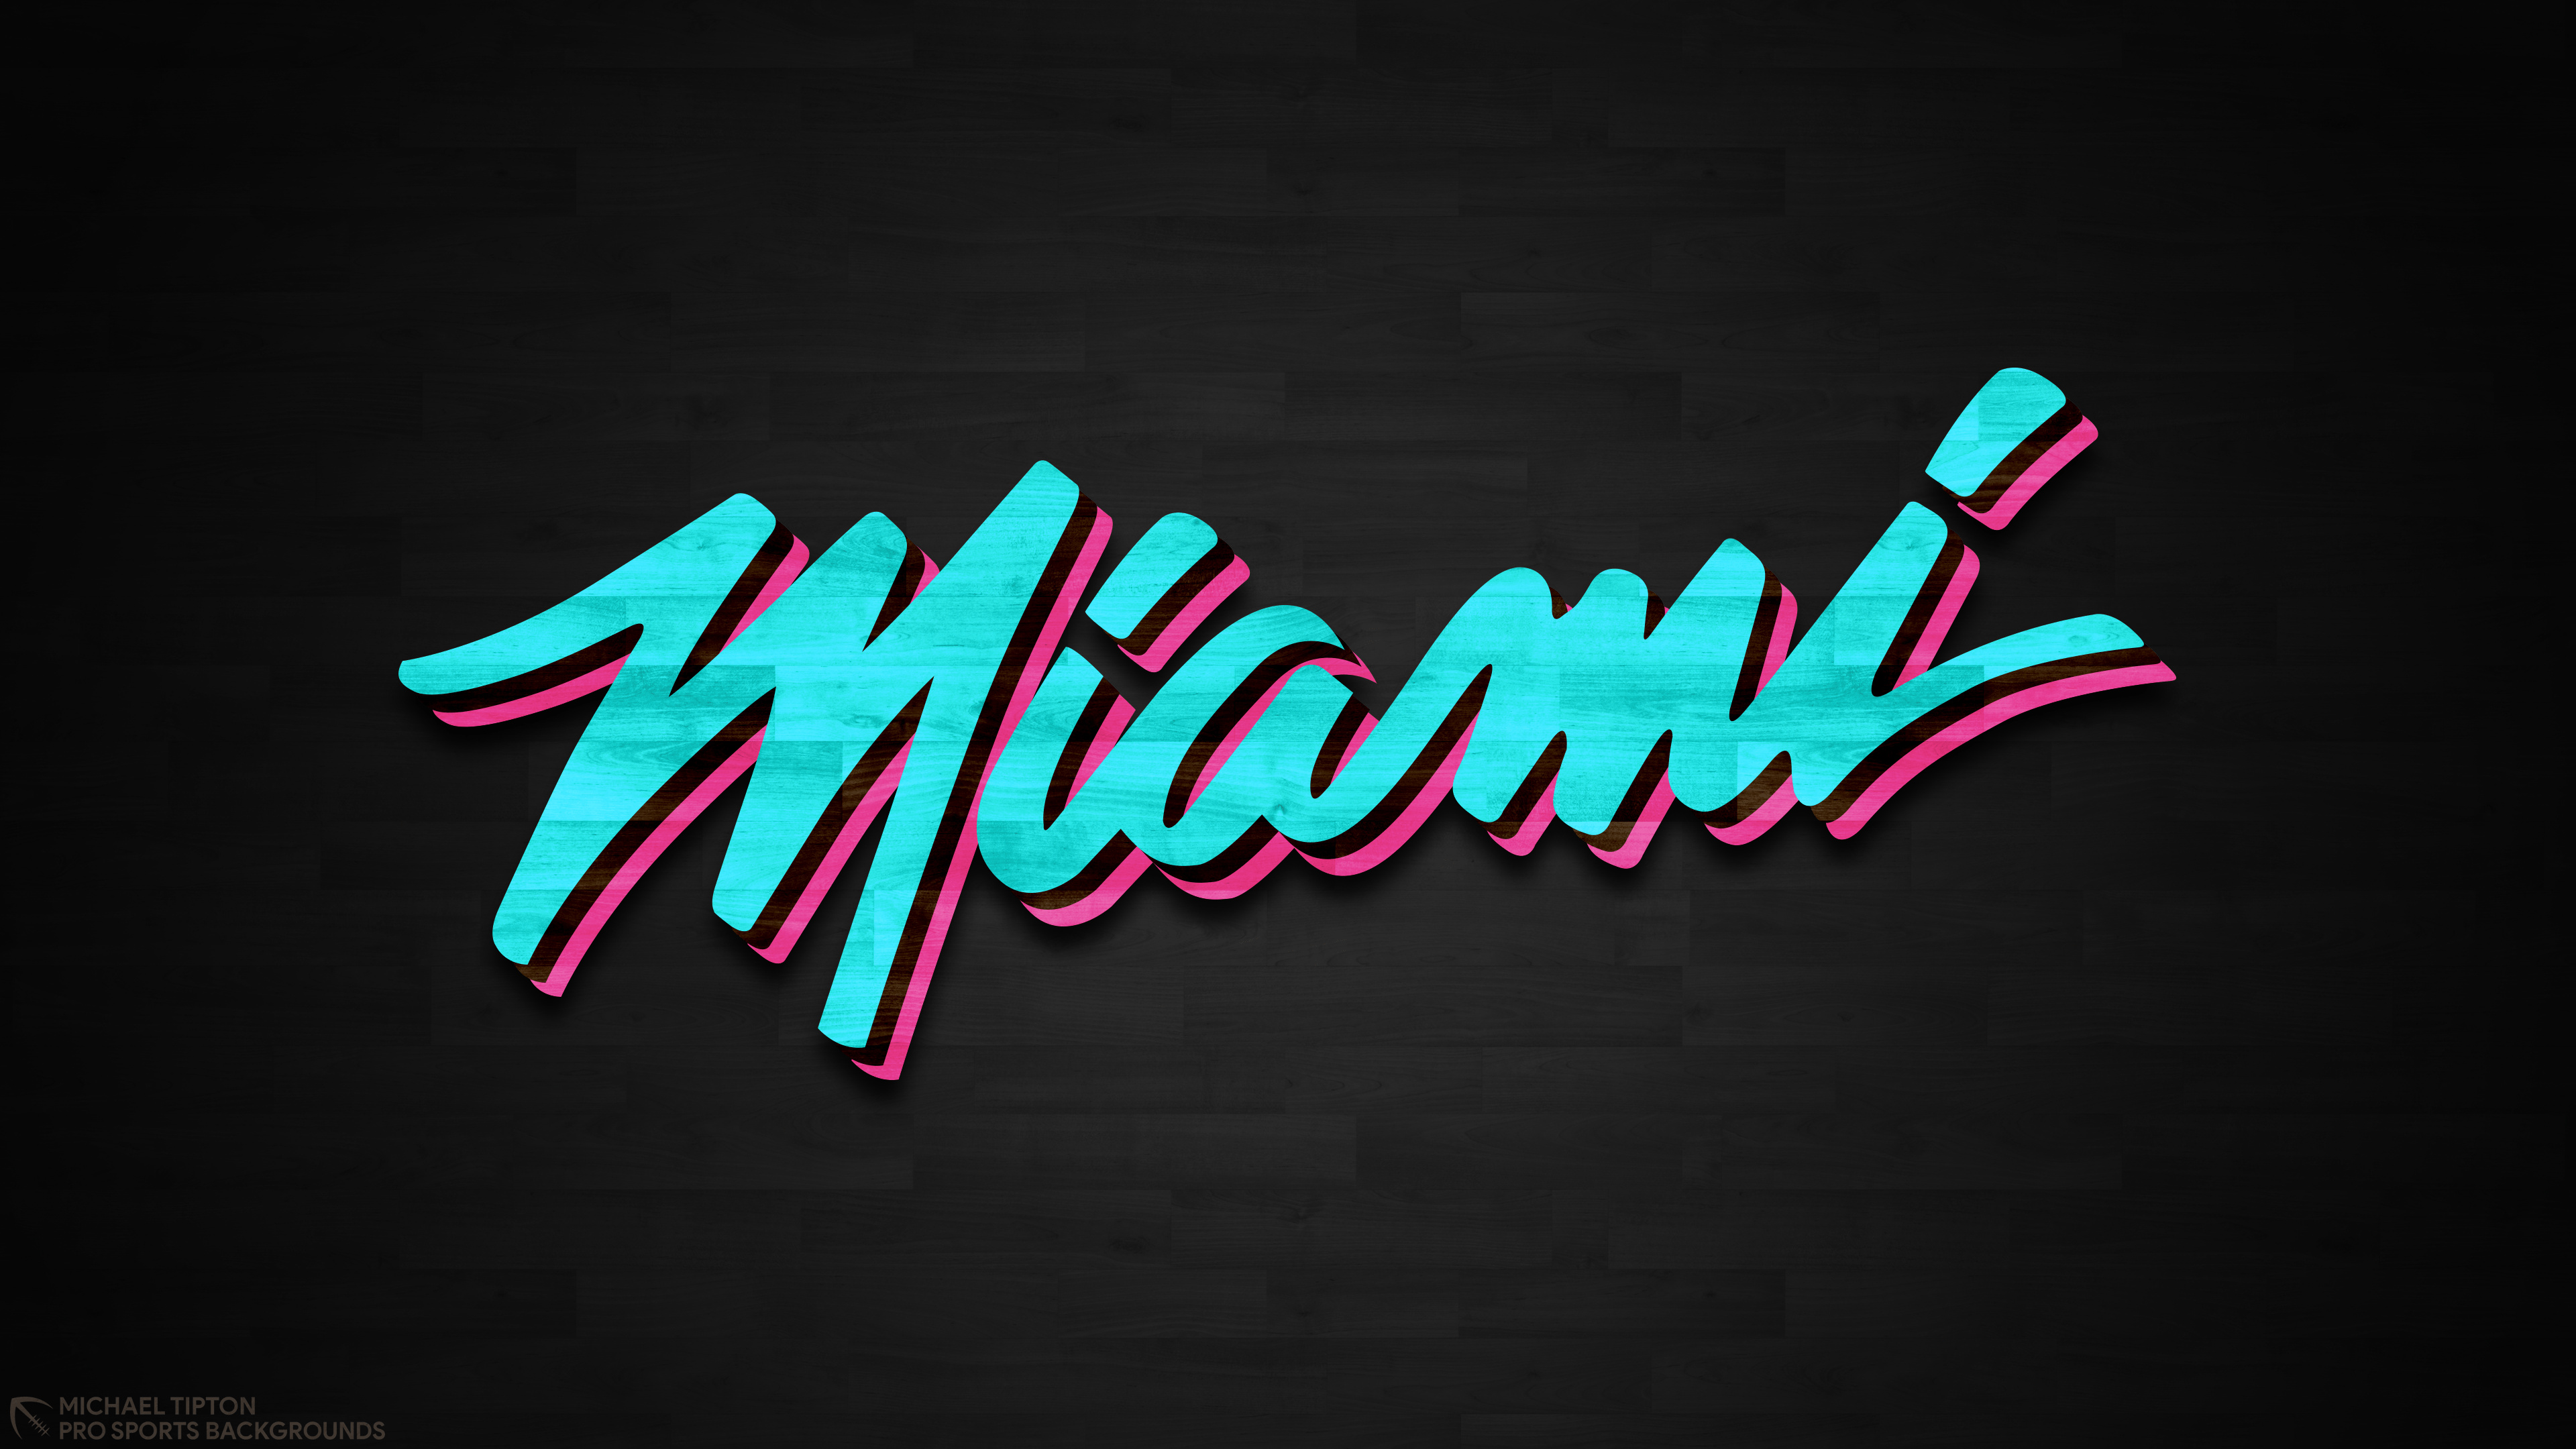 Miami Heat 4k Ultra HD Wallpaper. Background Imagex2160